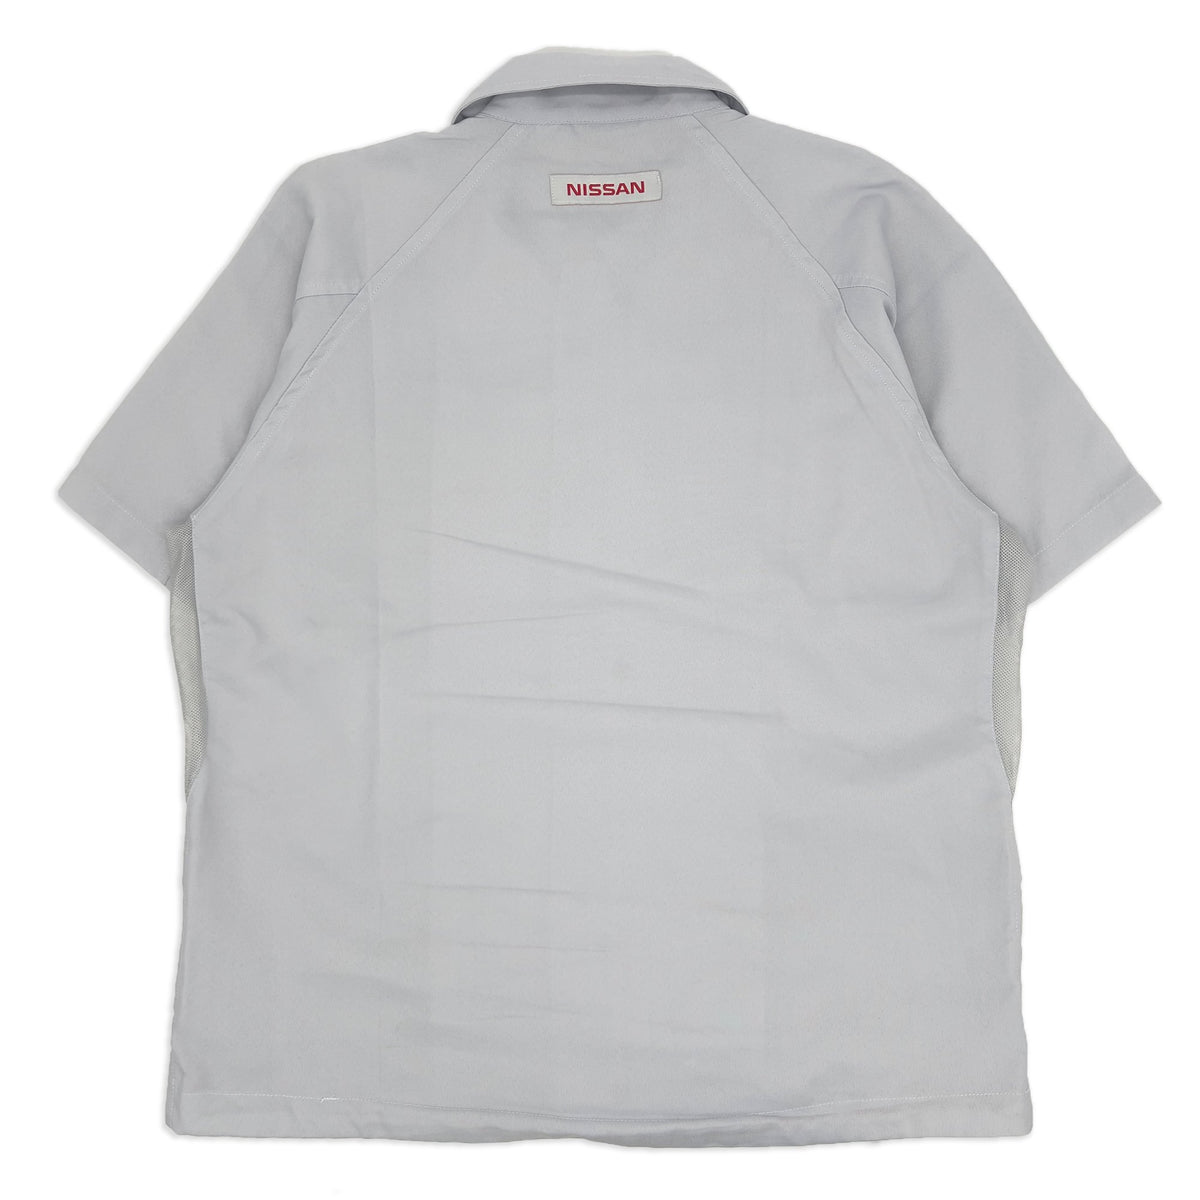 Retro JDM Nissan Technician Mechanic Summer Short Sleeve Staff Jacket Grey - Sugoi JDM